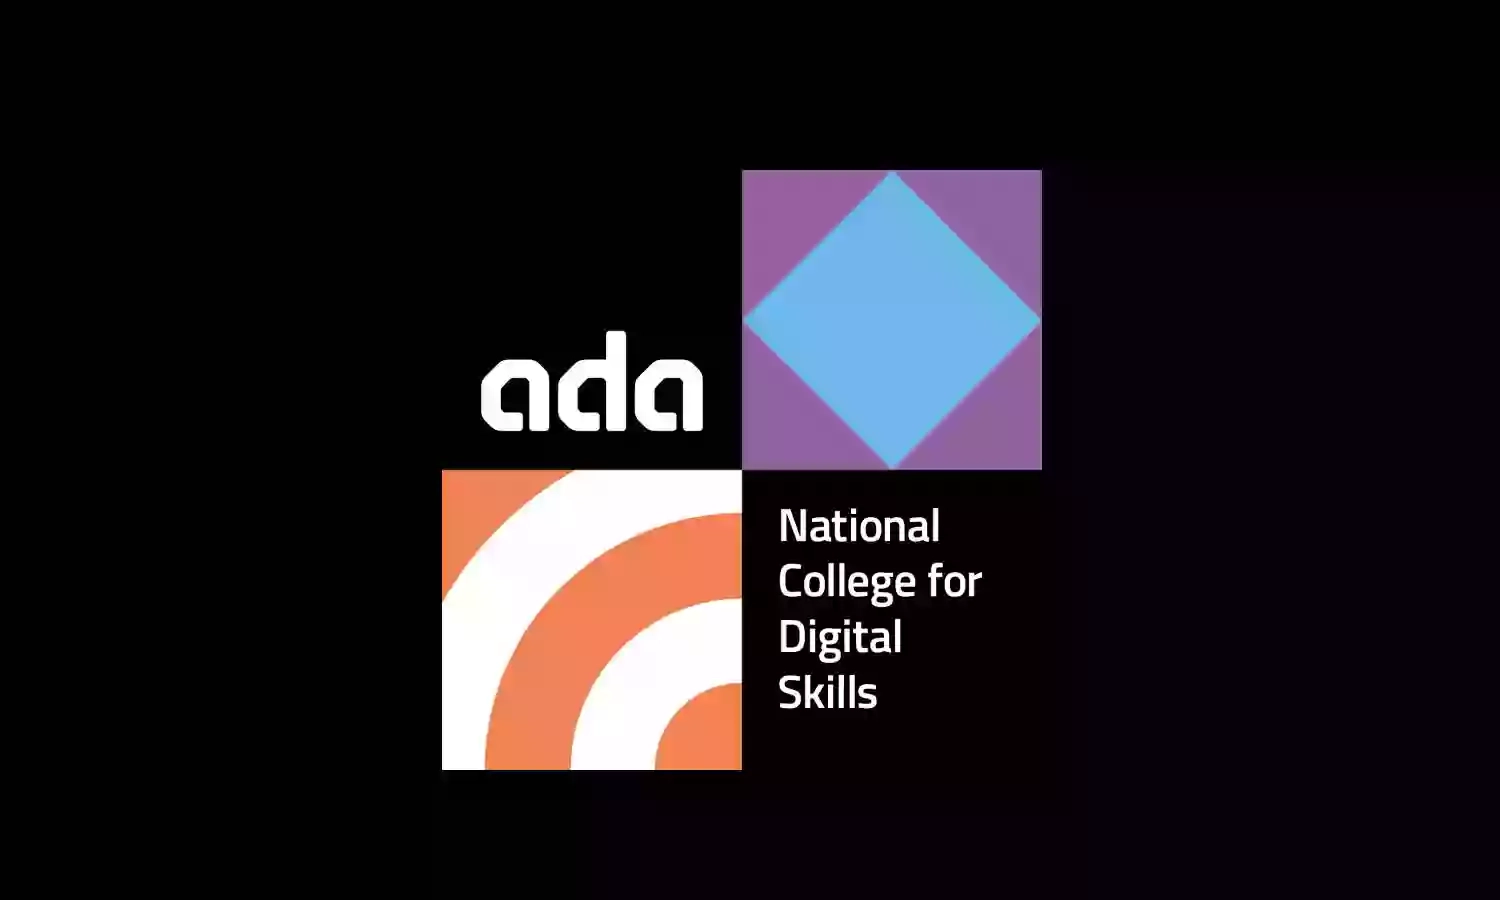 Ada. National College for Digital Skills